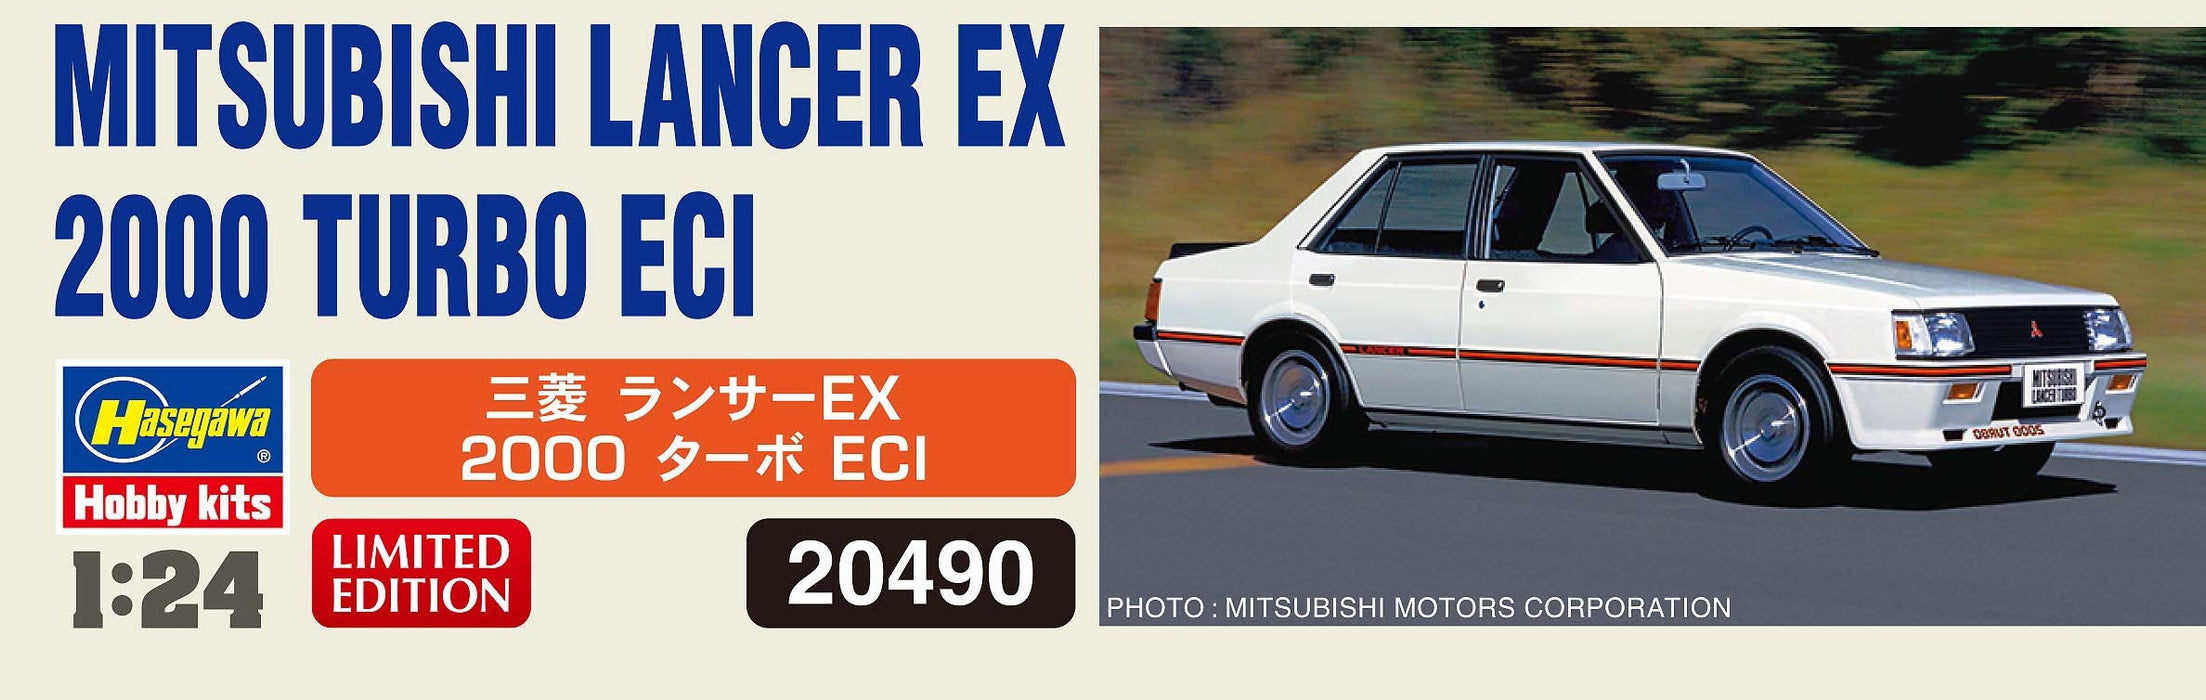 Hasegawa 1/24 MITSUBISHI LANCER EX 2000 TURBO ECI Model kit 020490 NEW_5